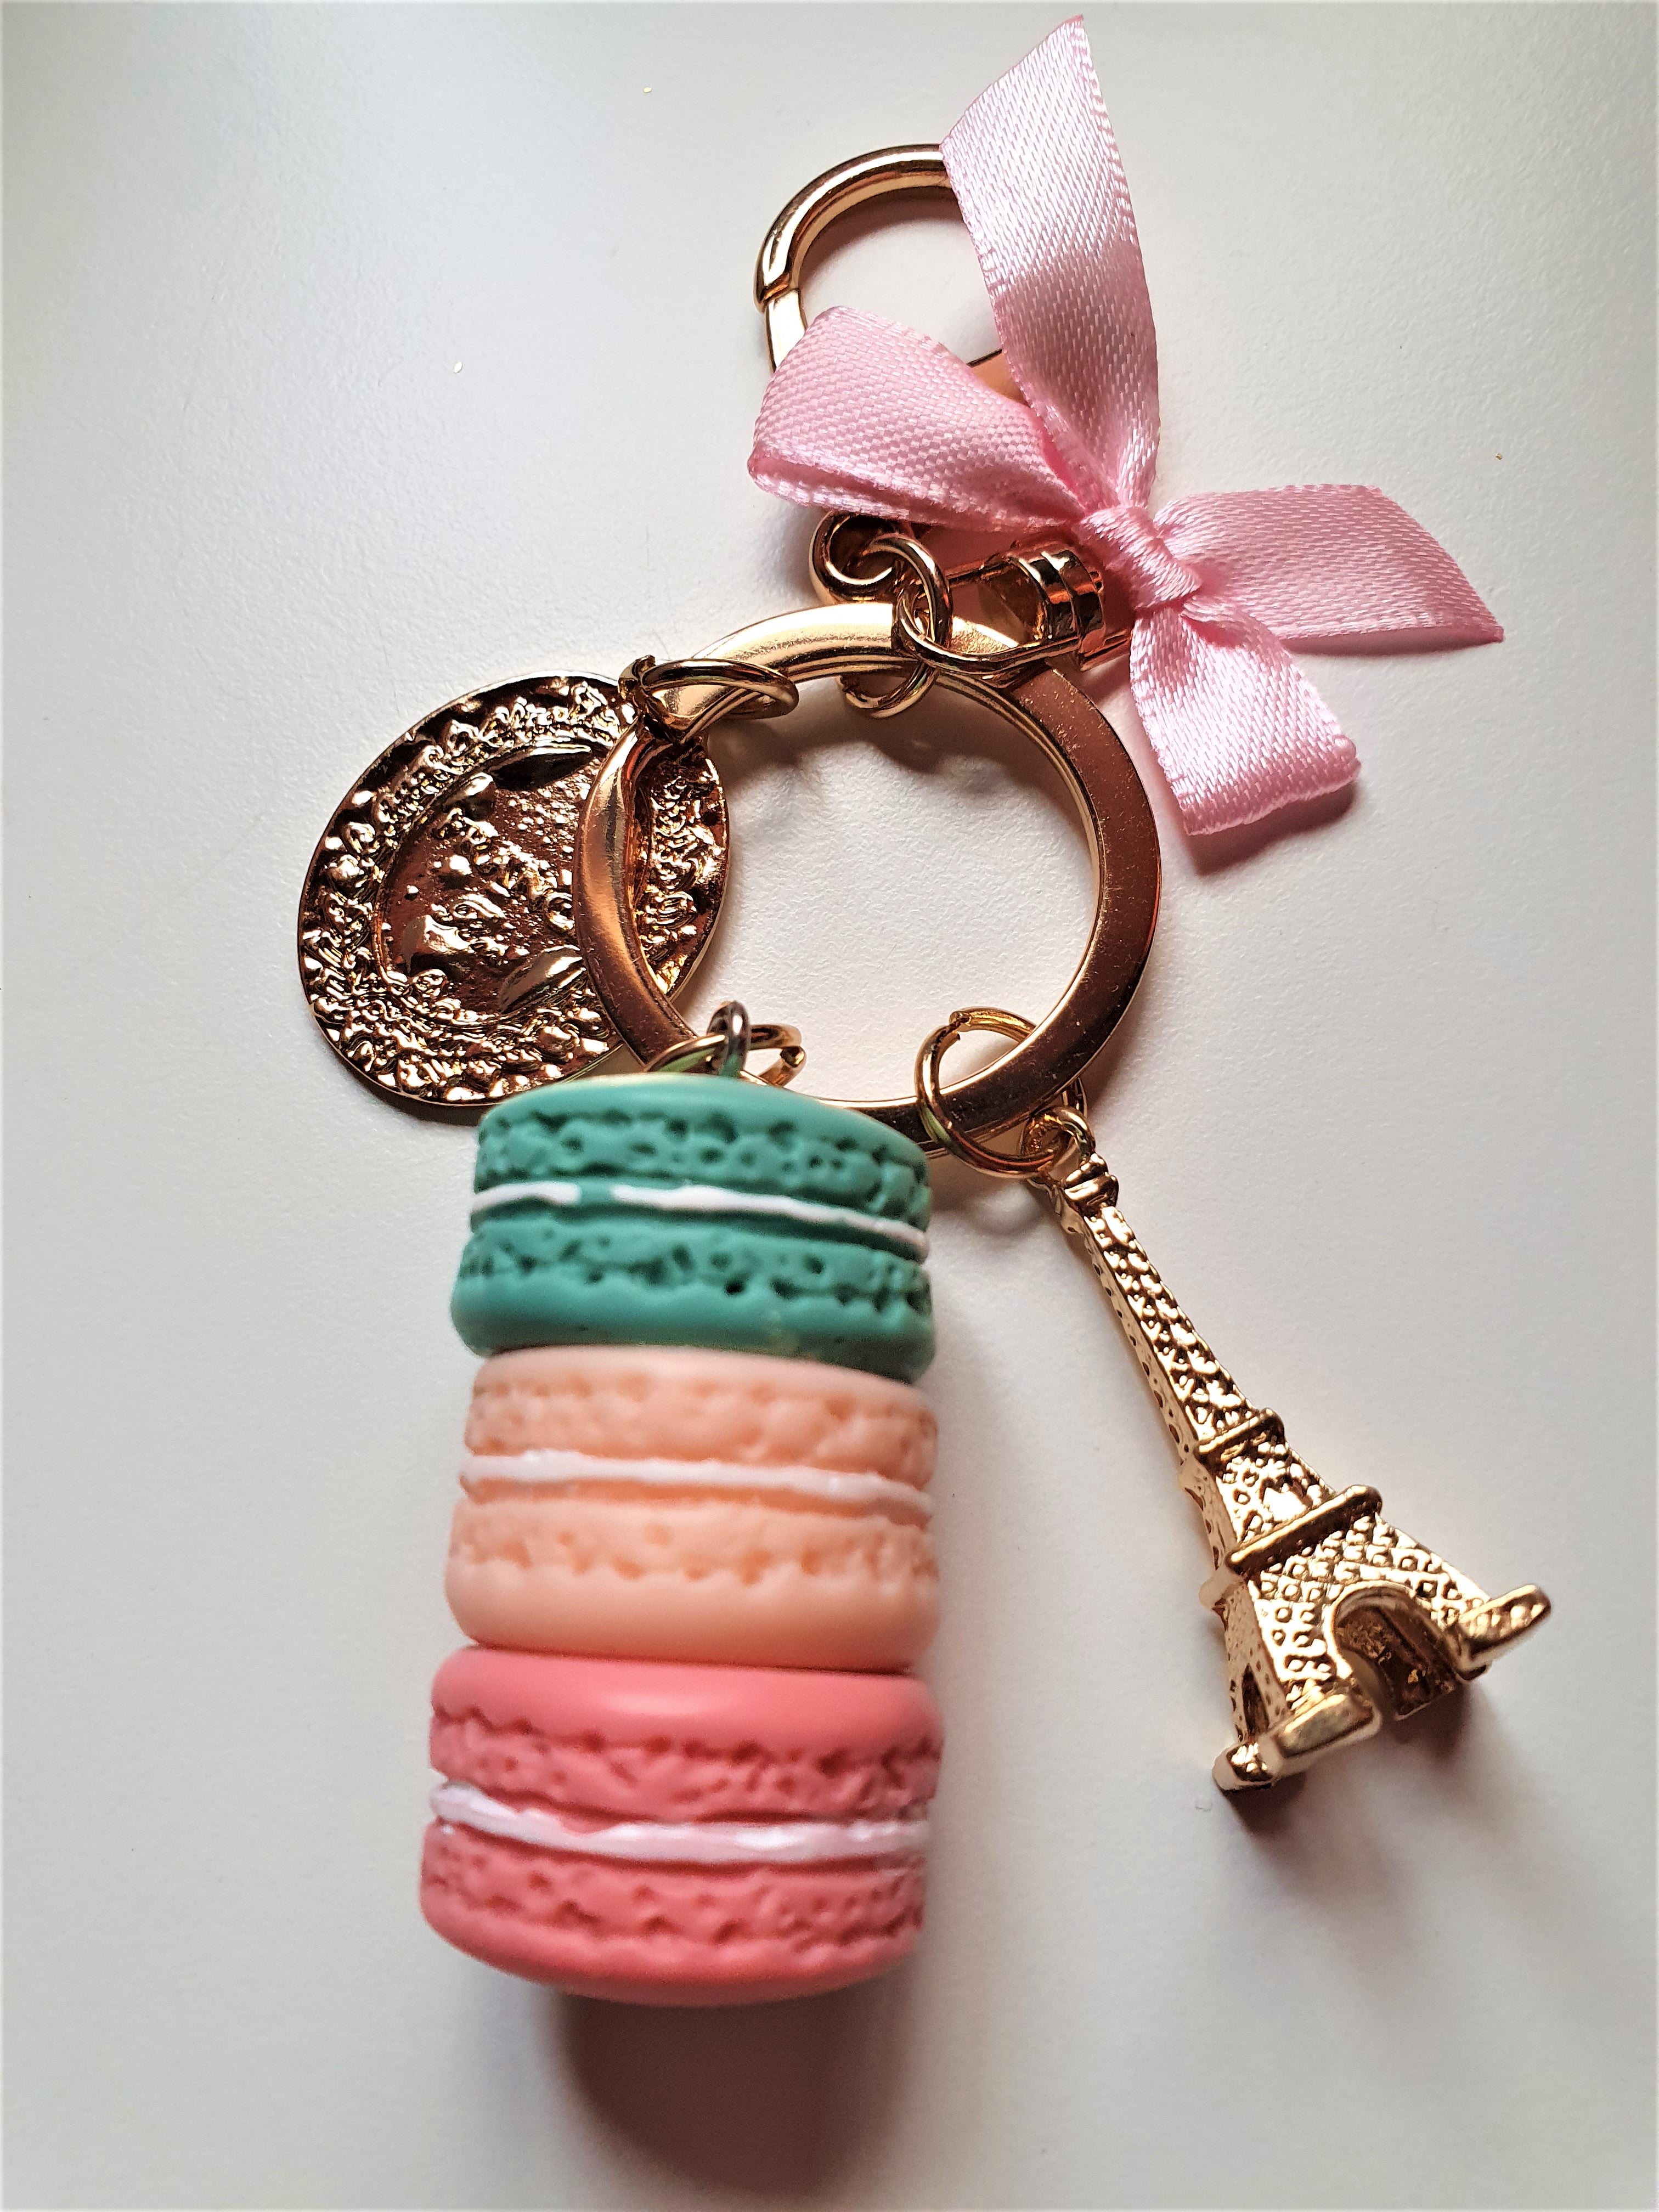 Set of Charm Bracelet with Teddy Bear design & Macaron Bag Charm and Key Chain